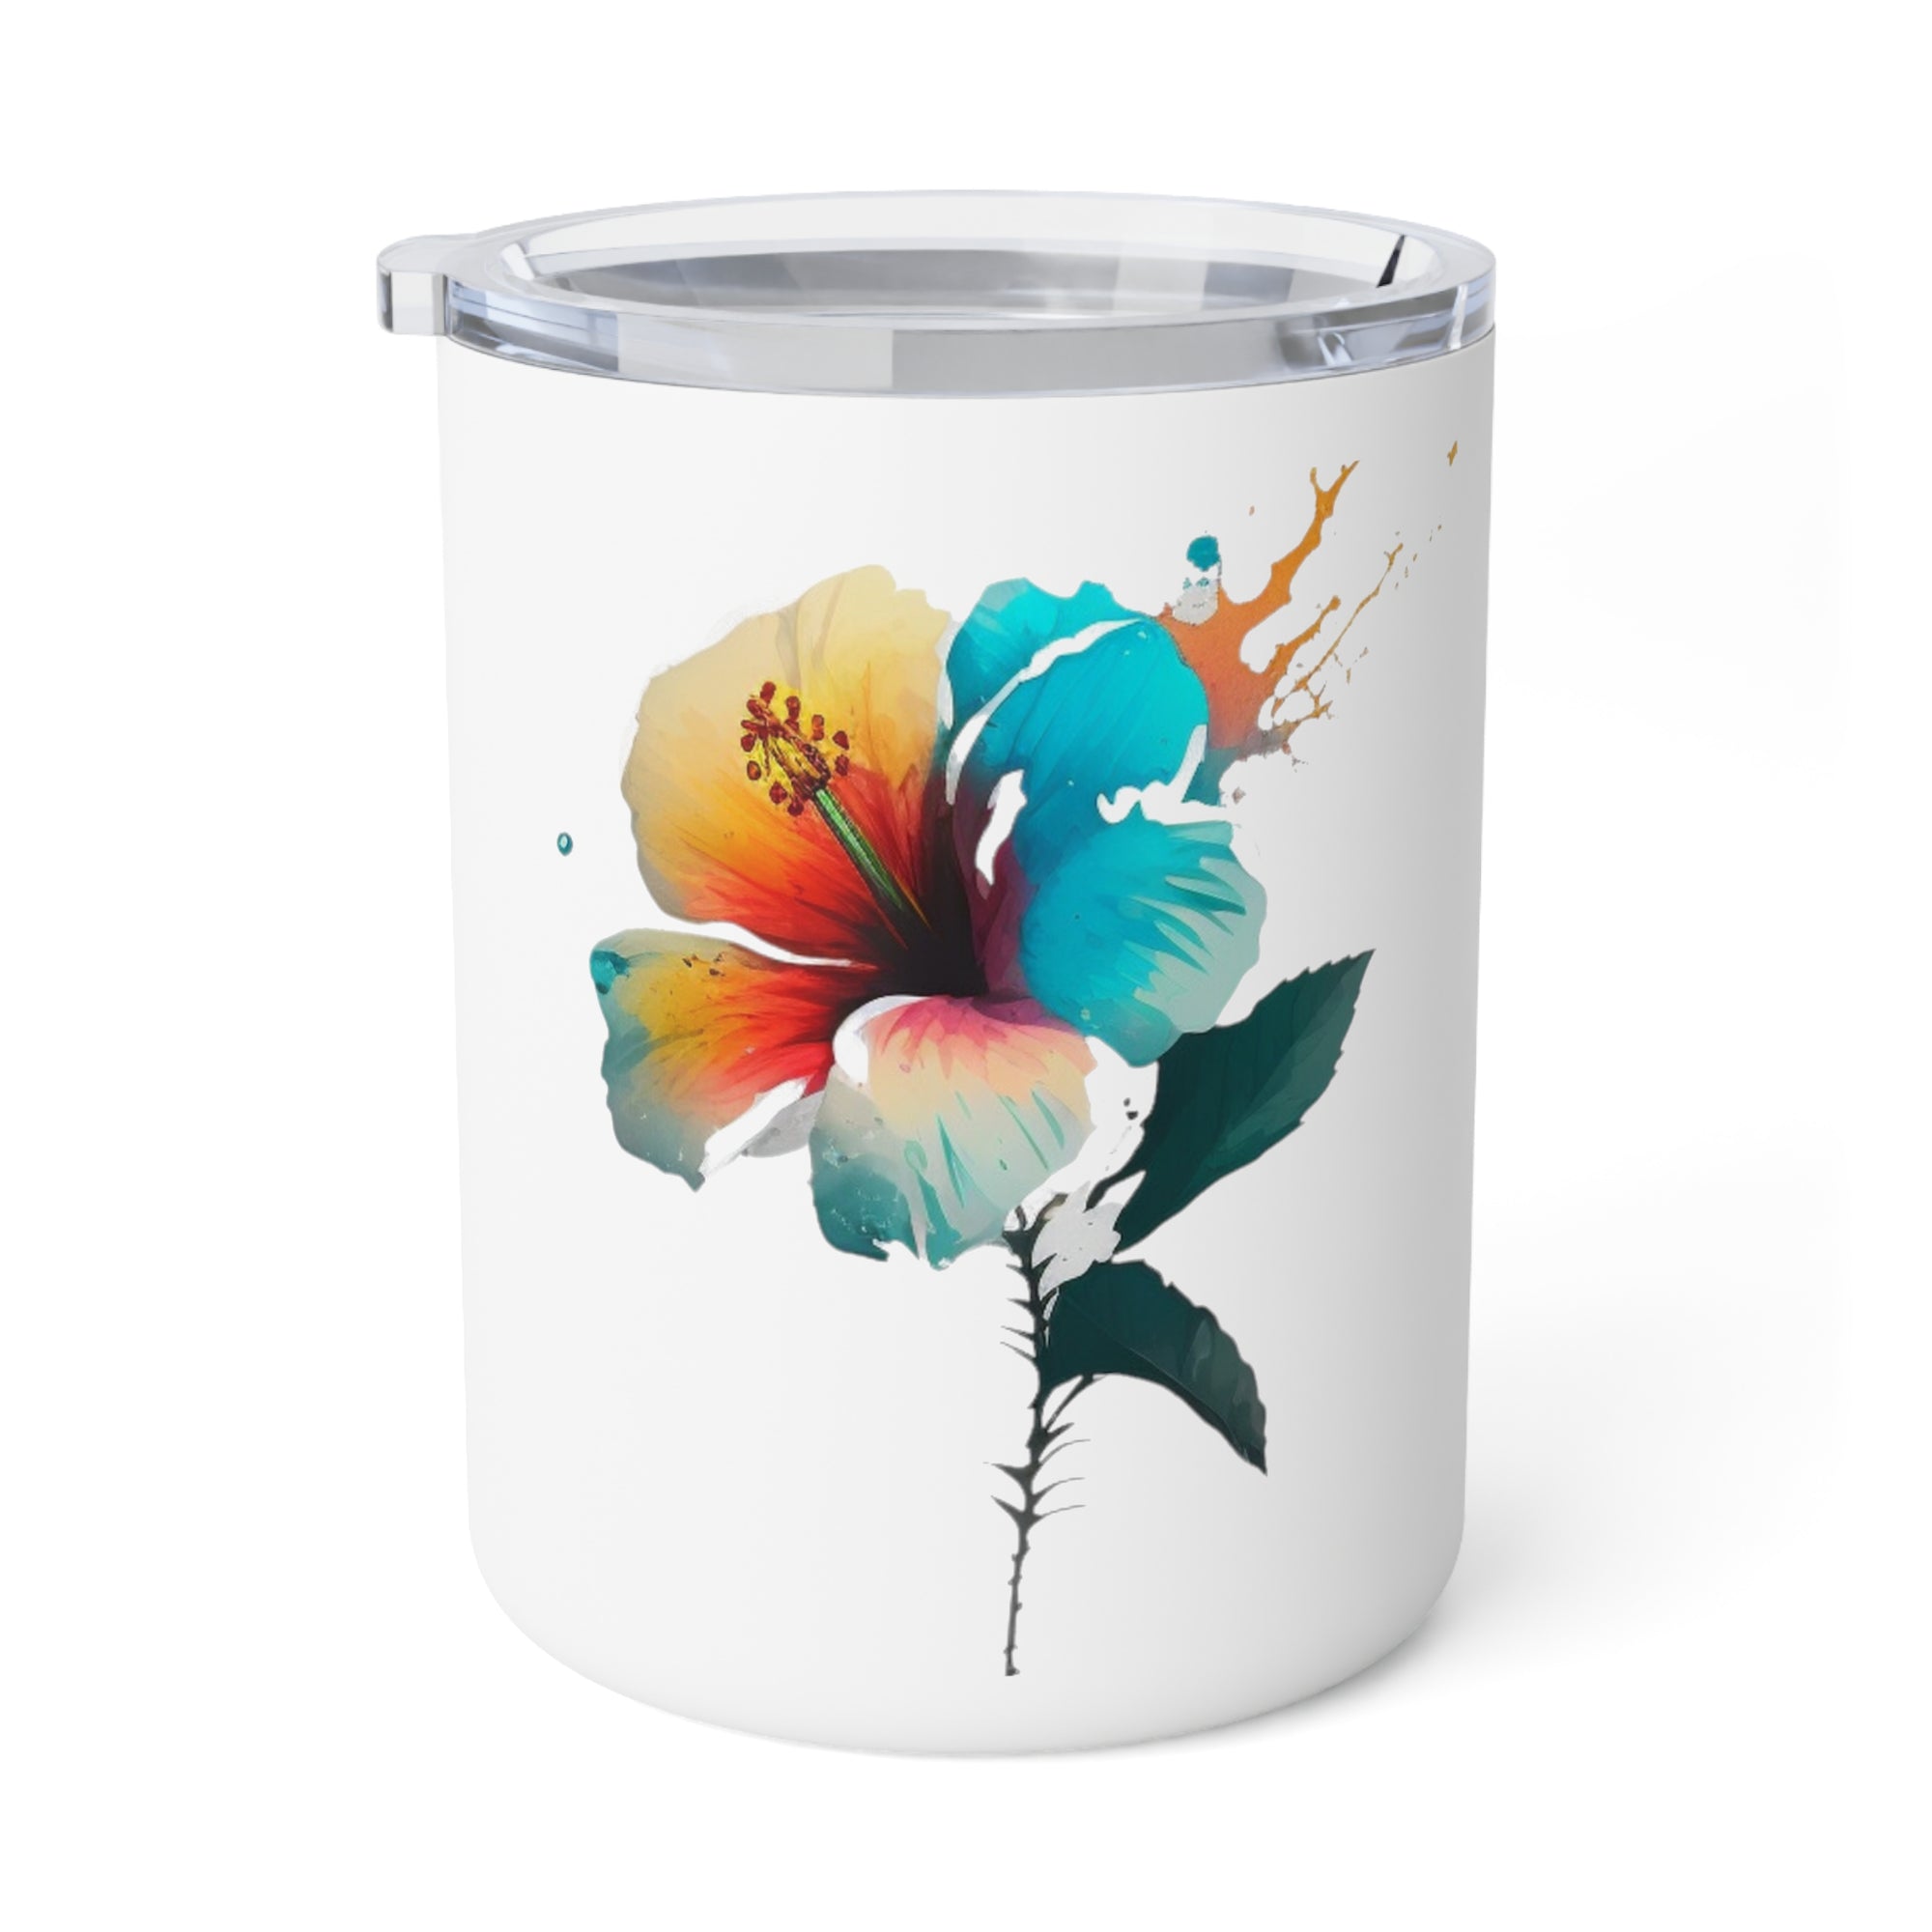 Hibiscus Dreams - Insulated Coffee Mug, 10oz